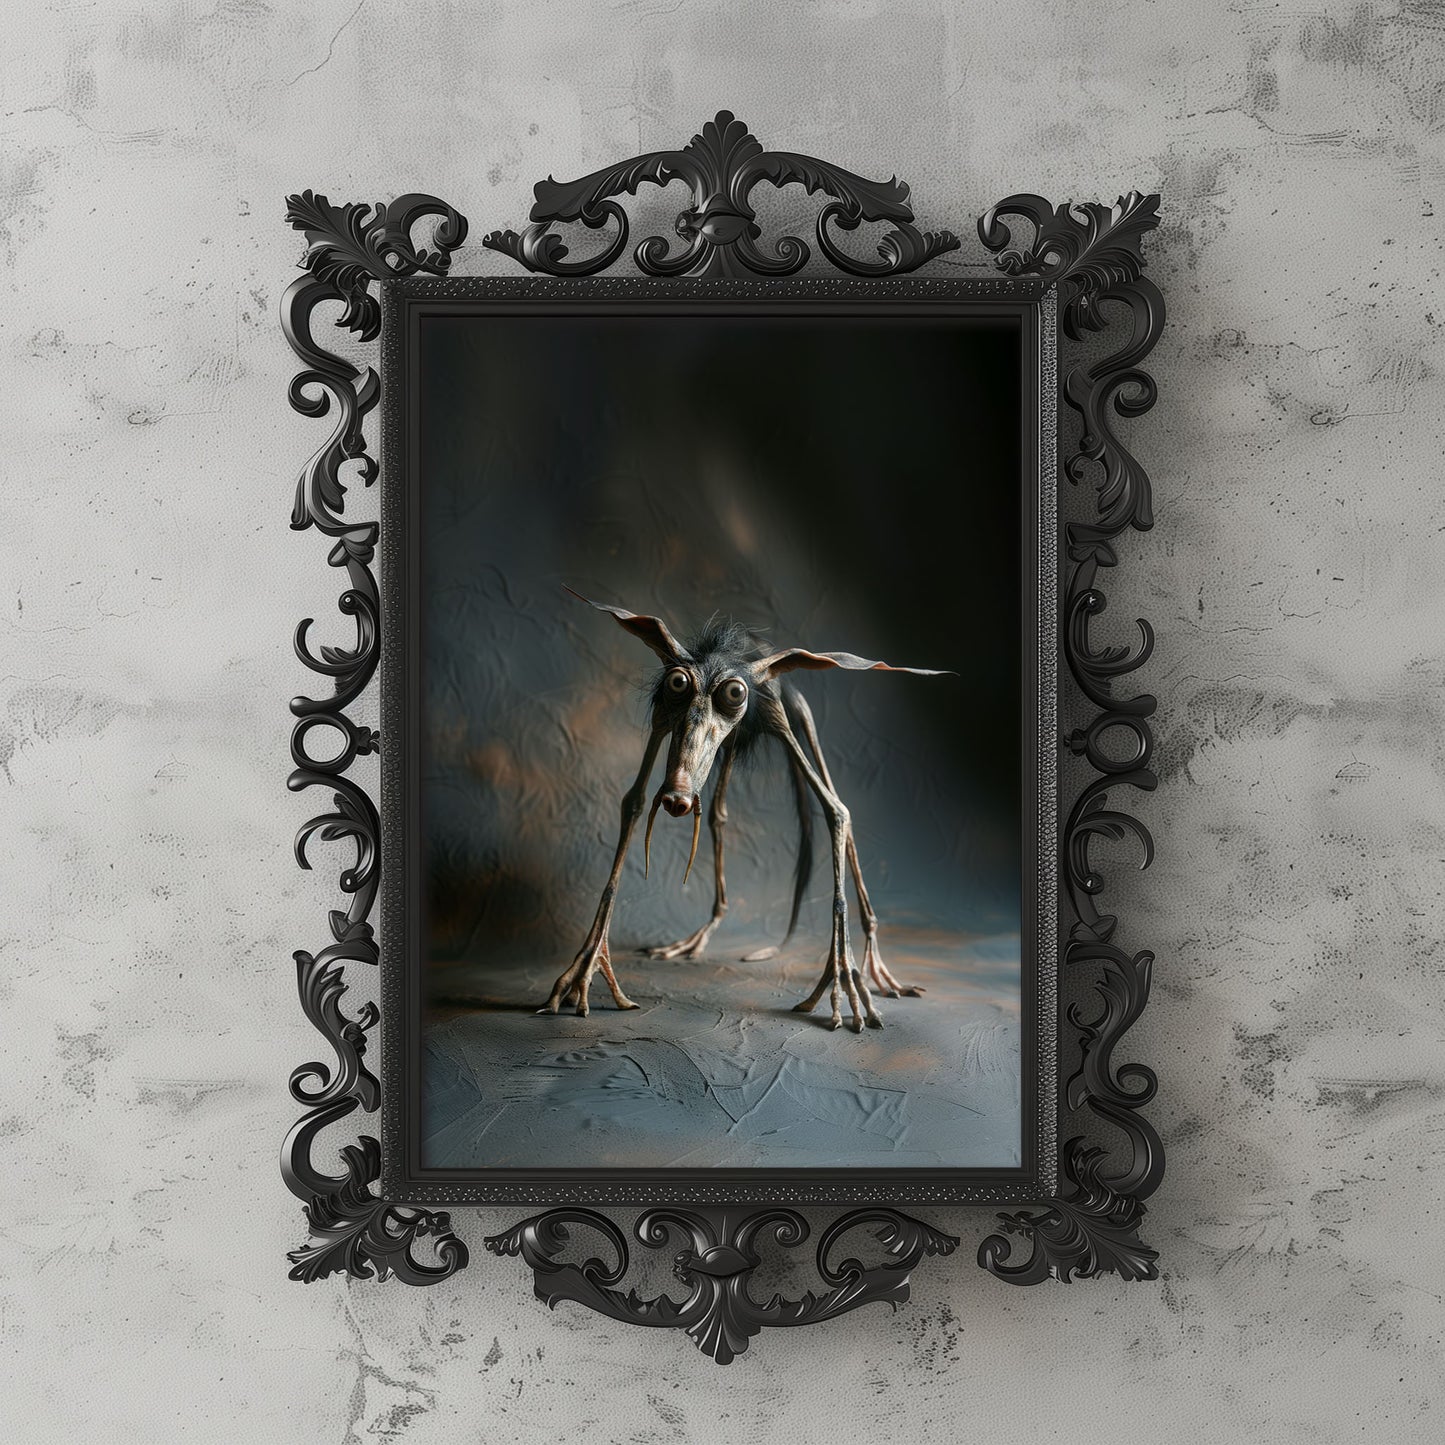 Creepy Cute Skinny Dog Photo Studio Art: Dark Scary Poster